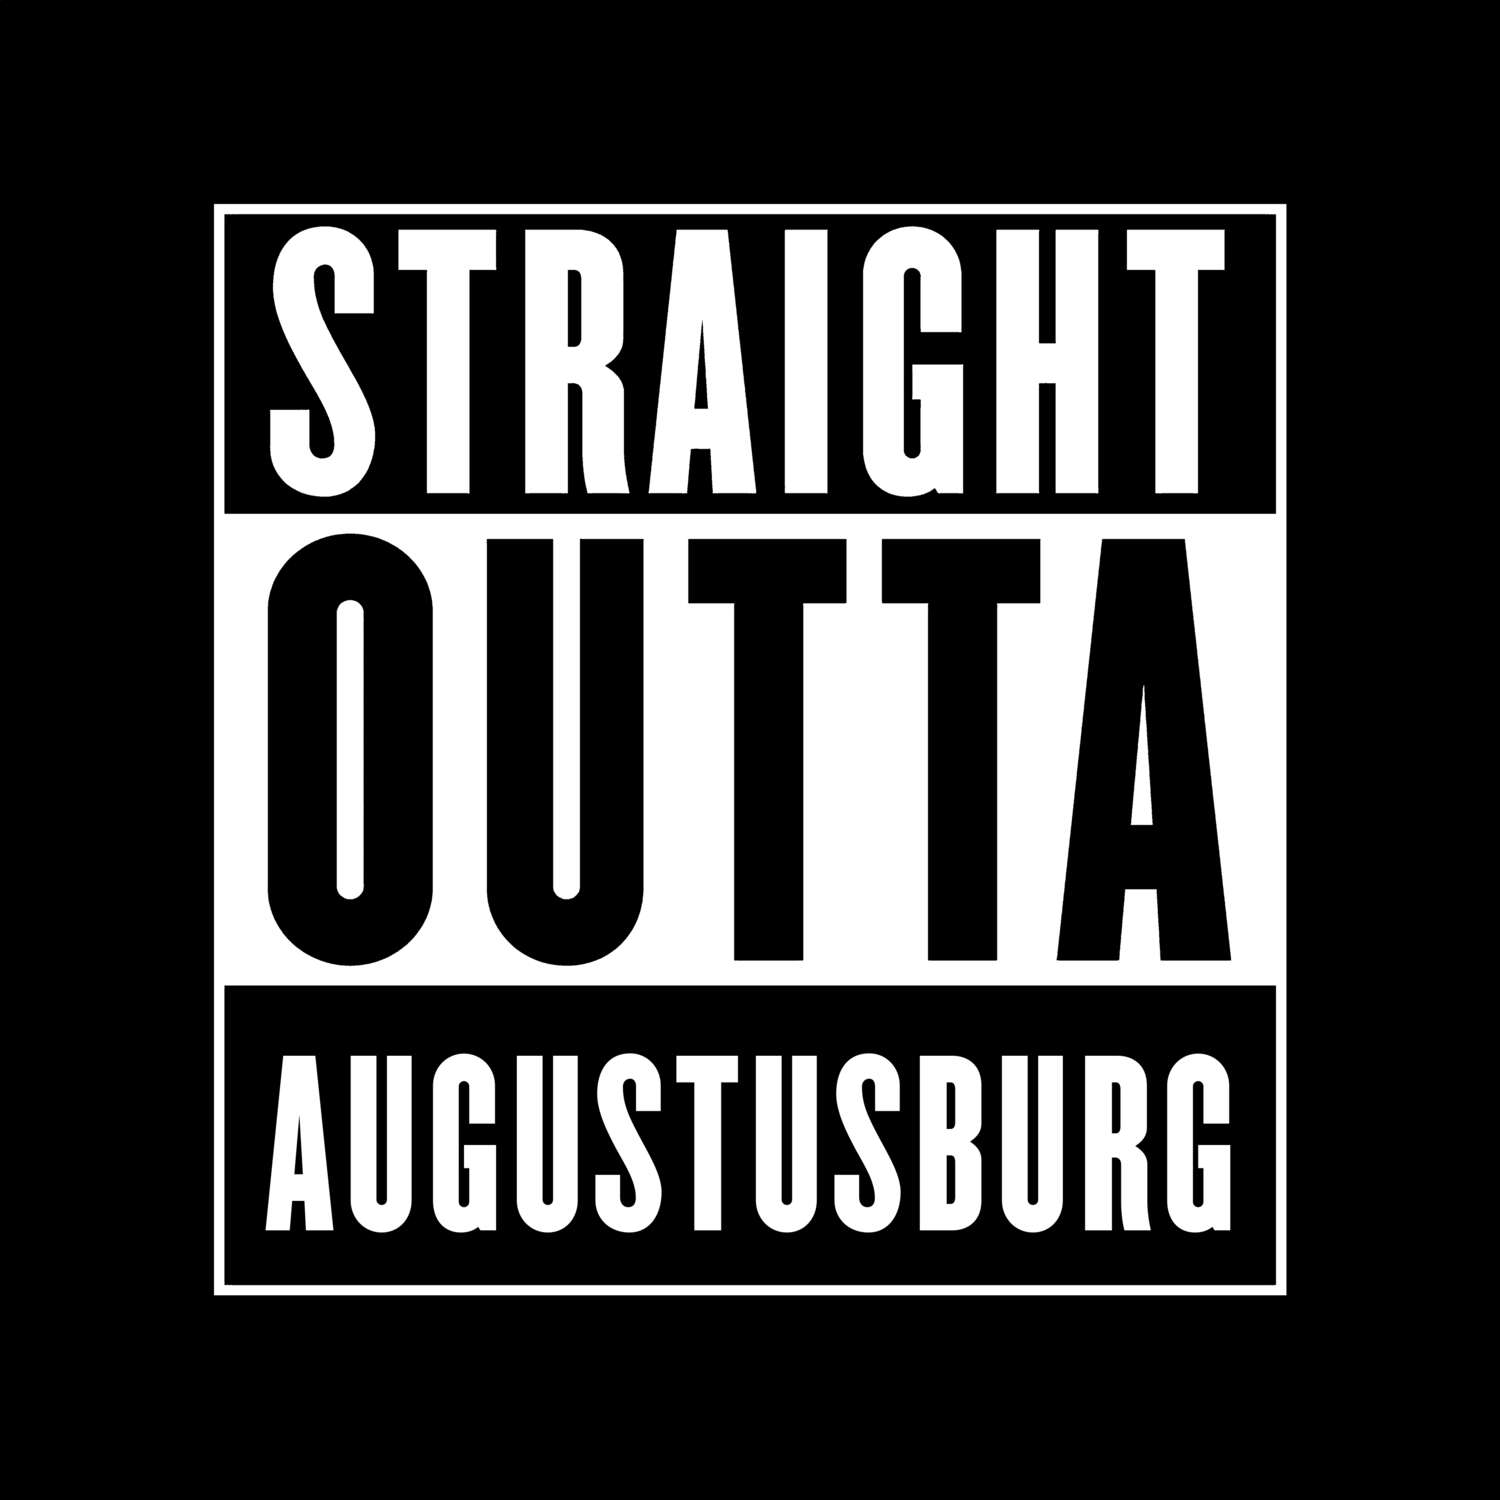 Augustusburg T-Shirt »Straight Outta«